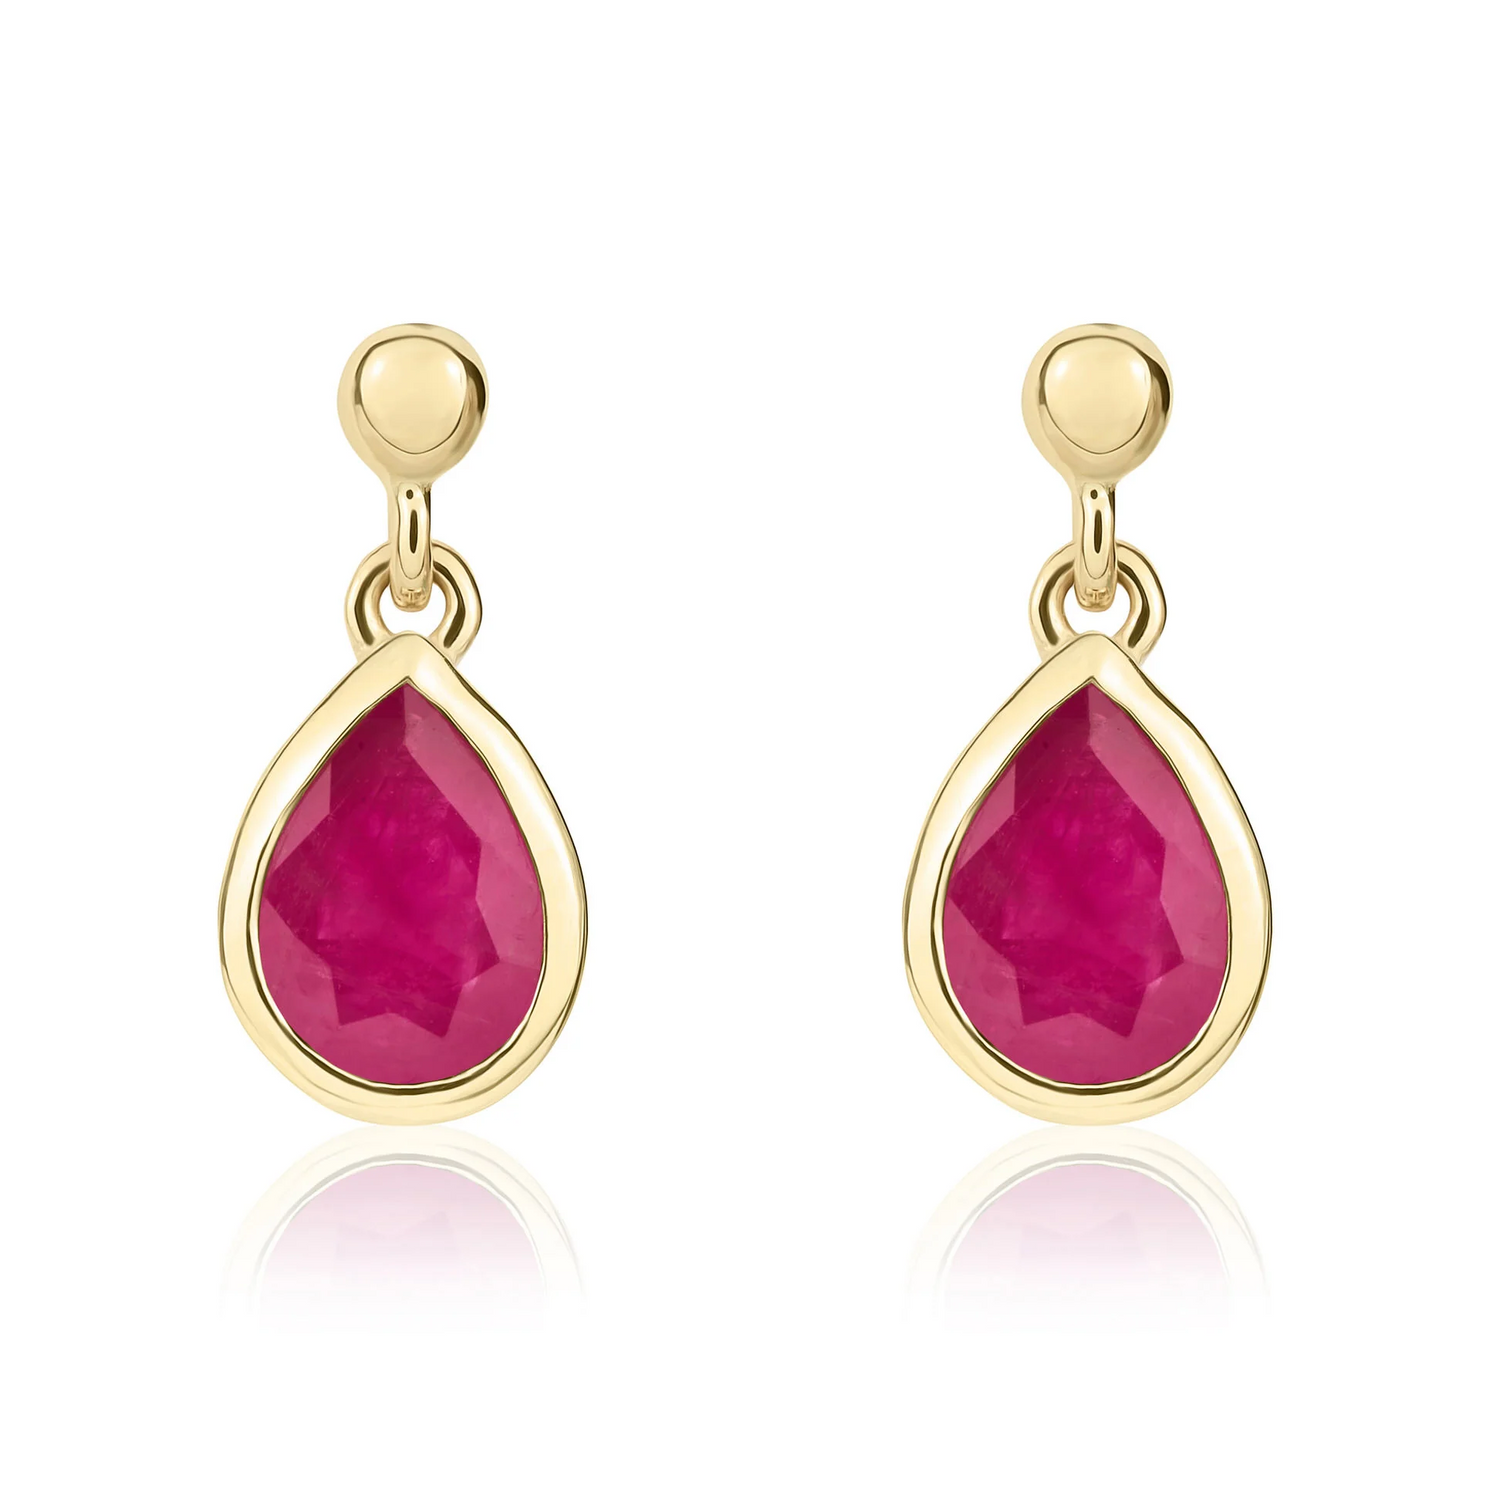 9CT Yellow Gold Pear Shaped Ruby Drop Earrings (7x5mm) - Robert Anthony Jewellers, Edinburgh